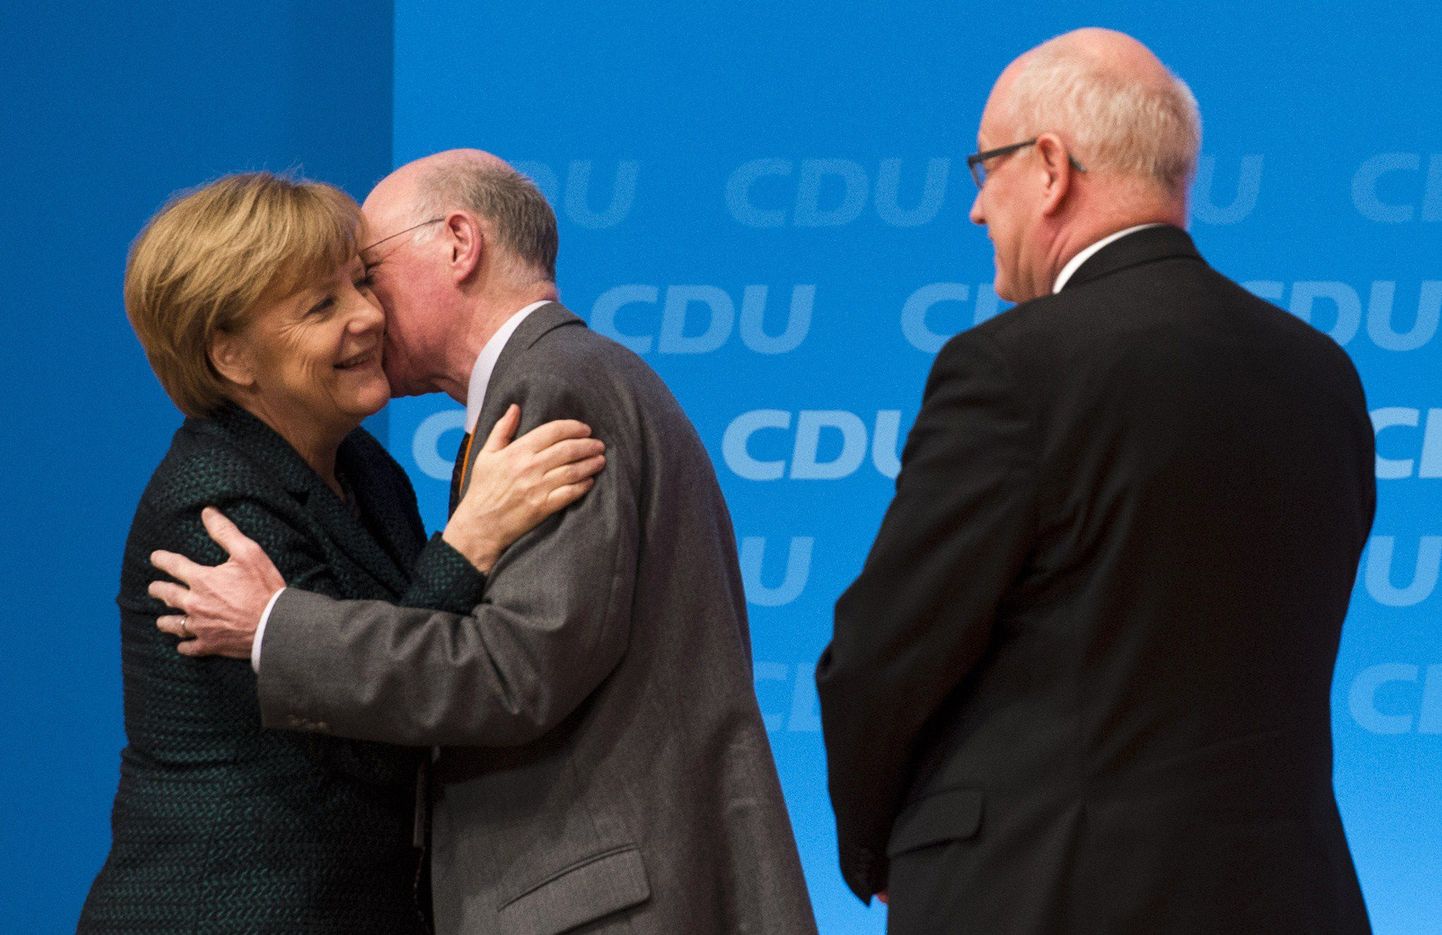 Merkelit õnnitleb Saksa parlamendi Bundestagi president Norbert Lammert.